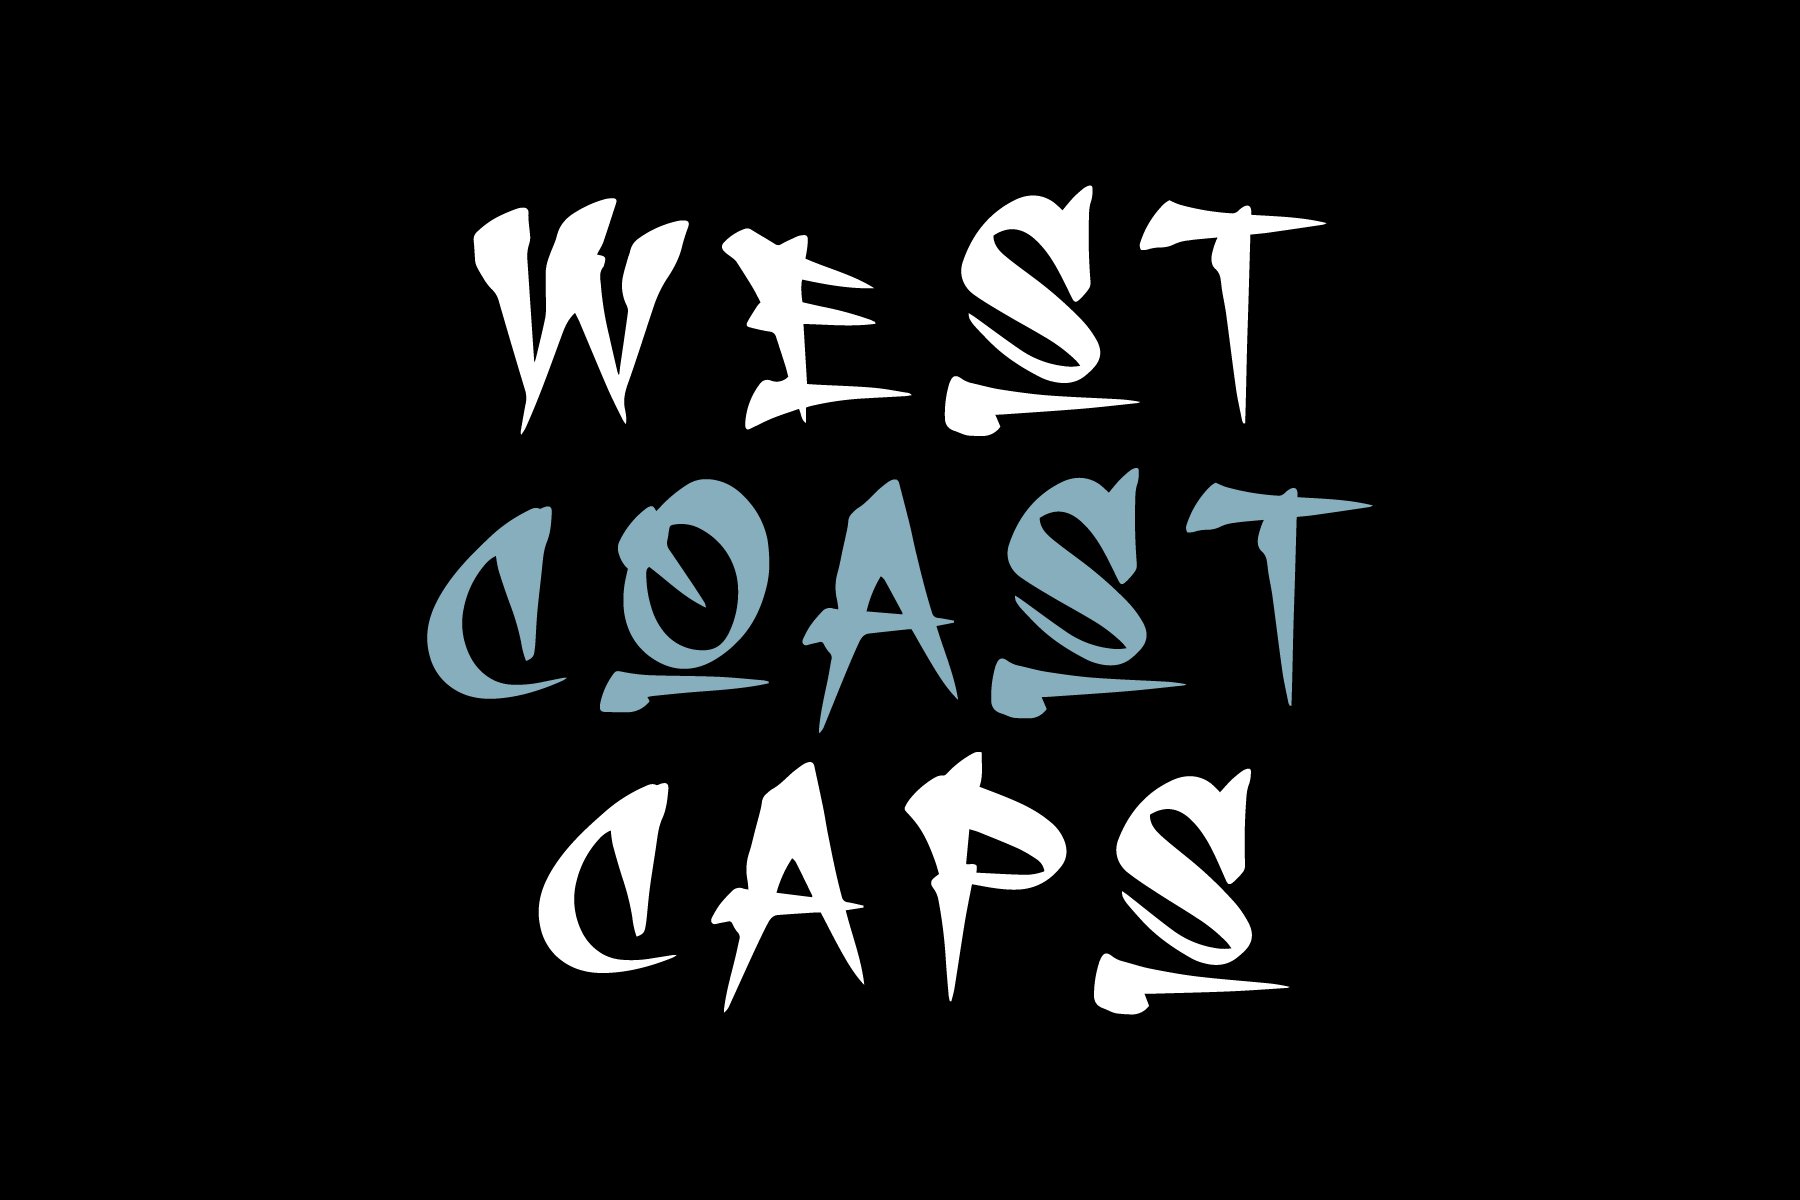 WEST COAST CAPS cover image.